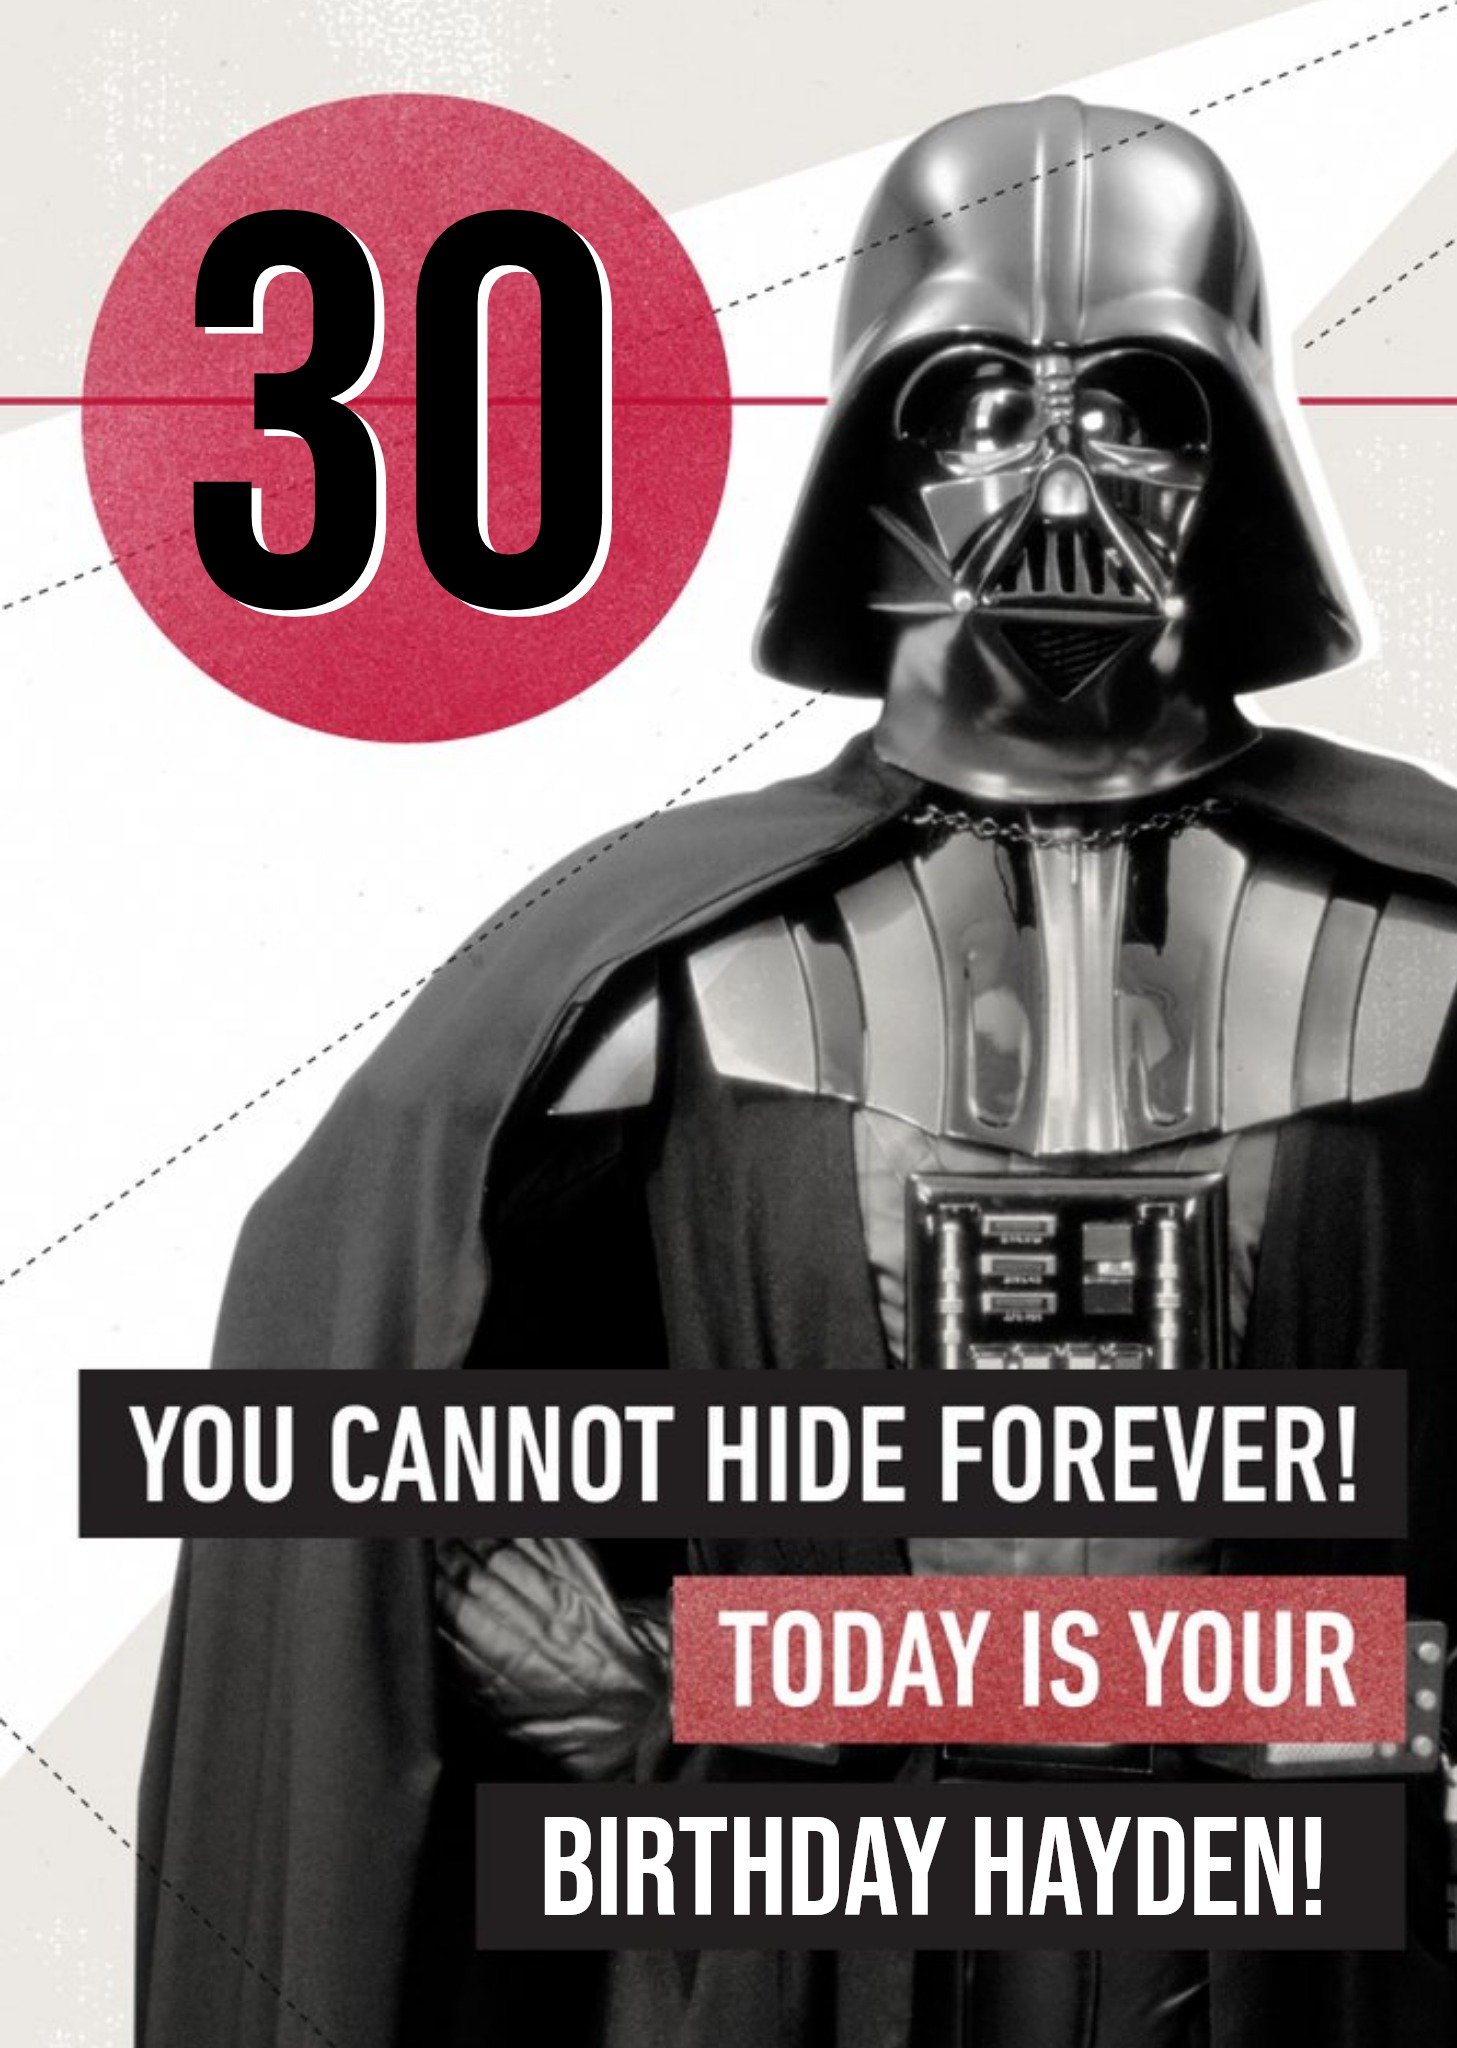 Disney Star Wars Darth Vader 30th Birthday Card, Large